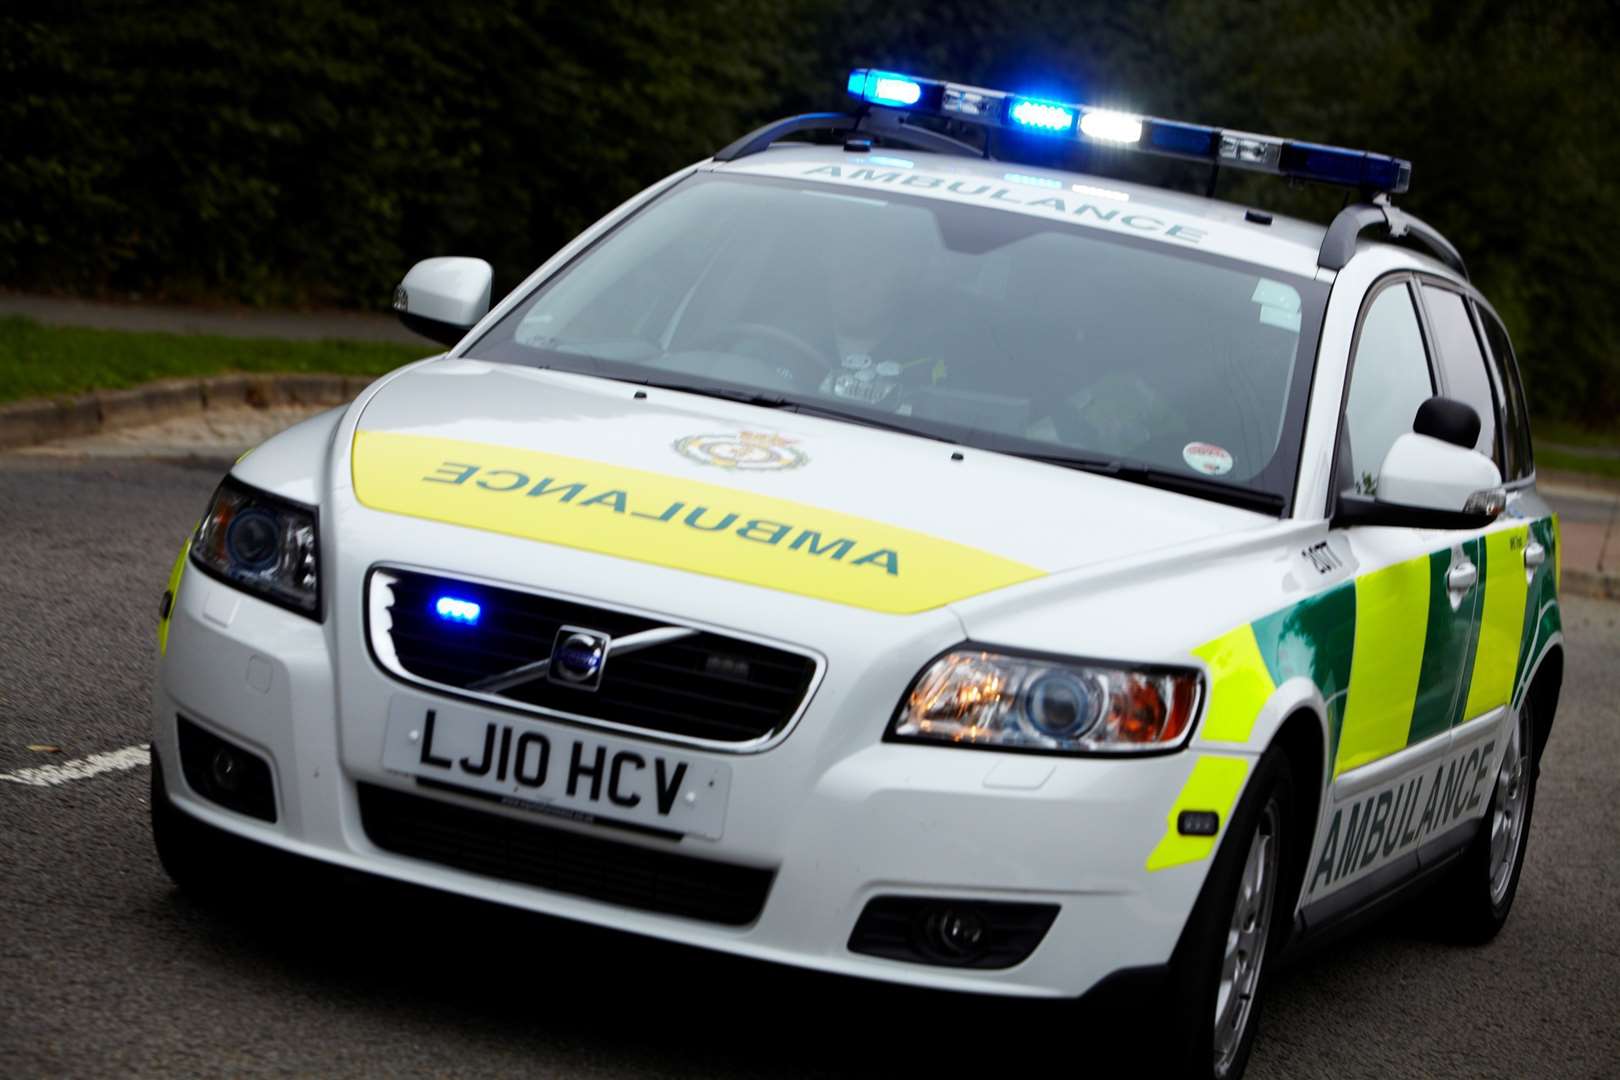 An ambulance car. Stock image